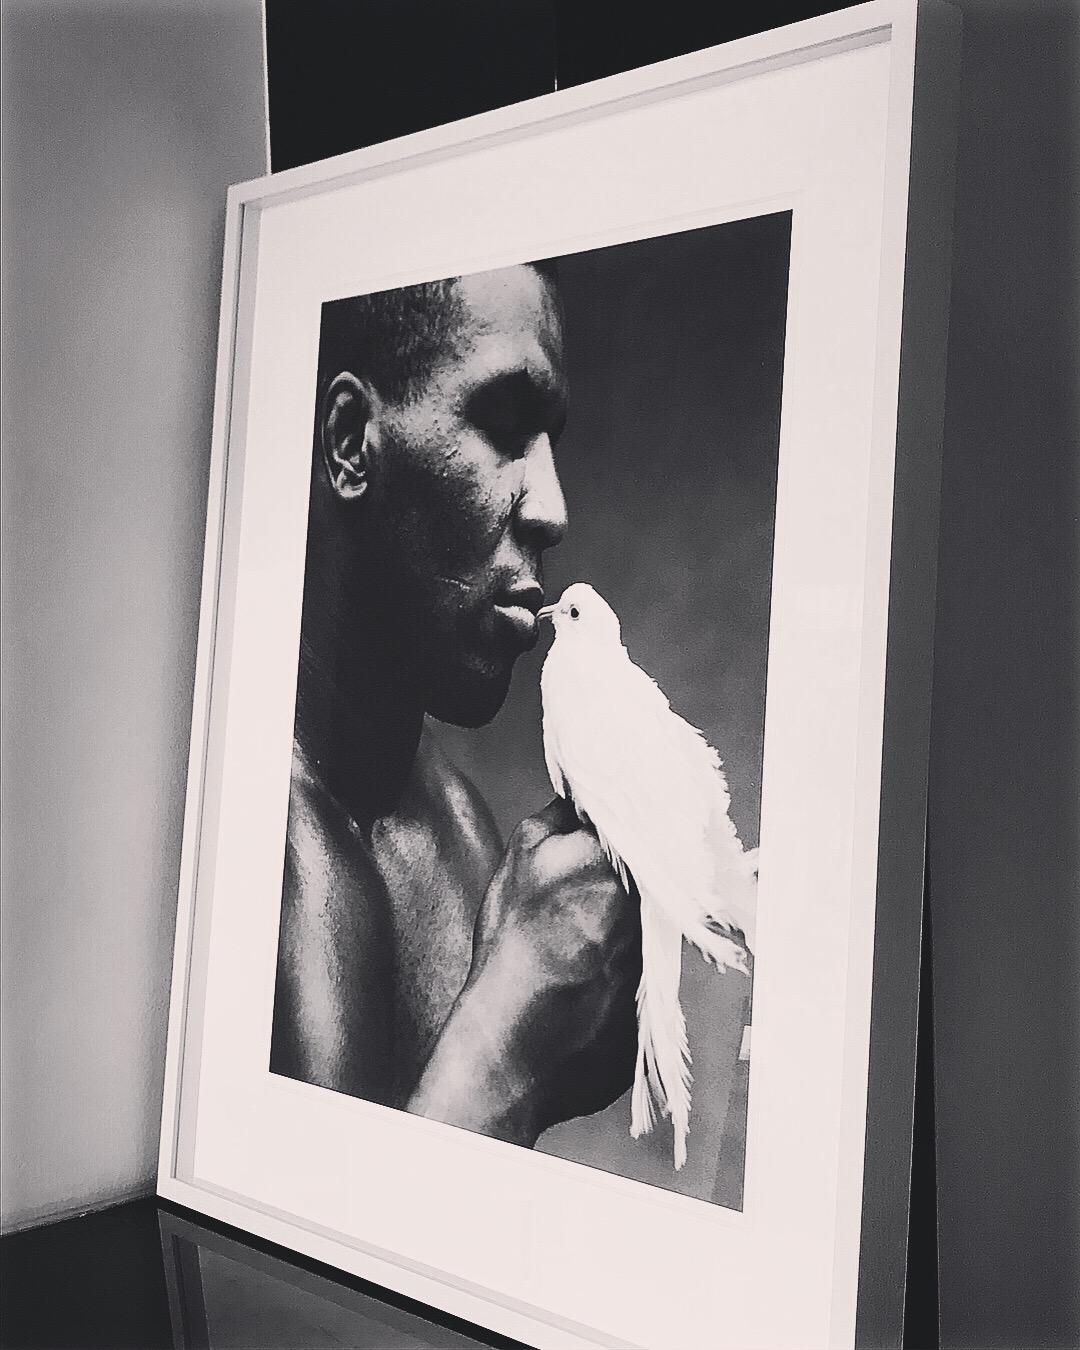 Mike Tyson with Dove - Portrait of the boxer legend  - Photograph by Michel Comte